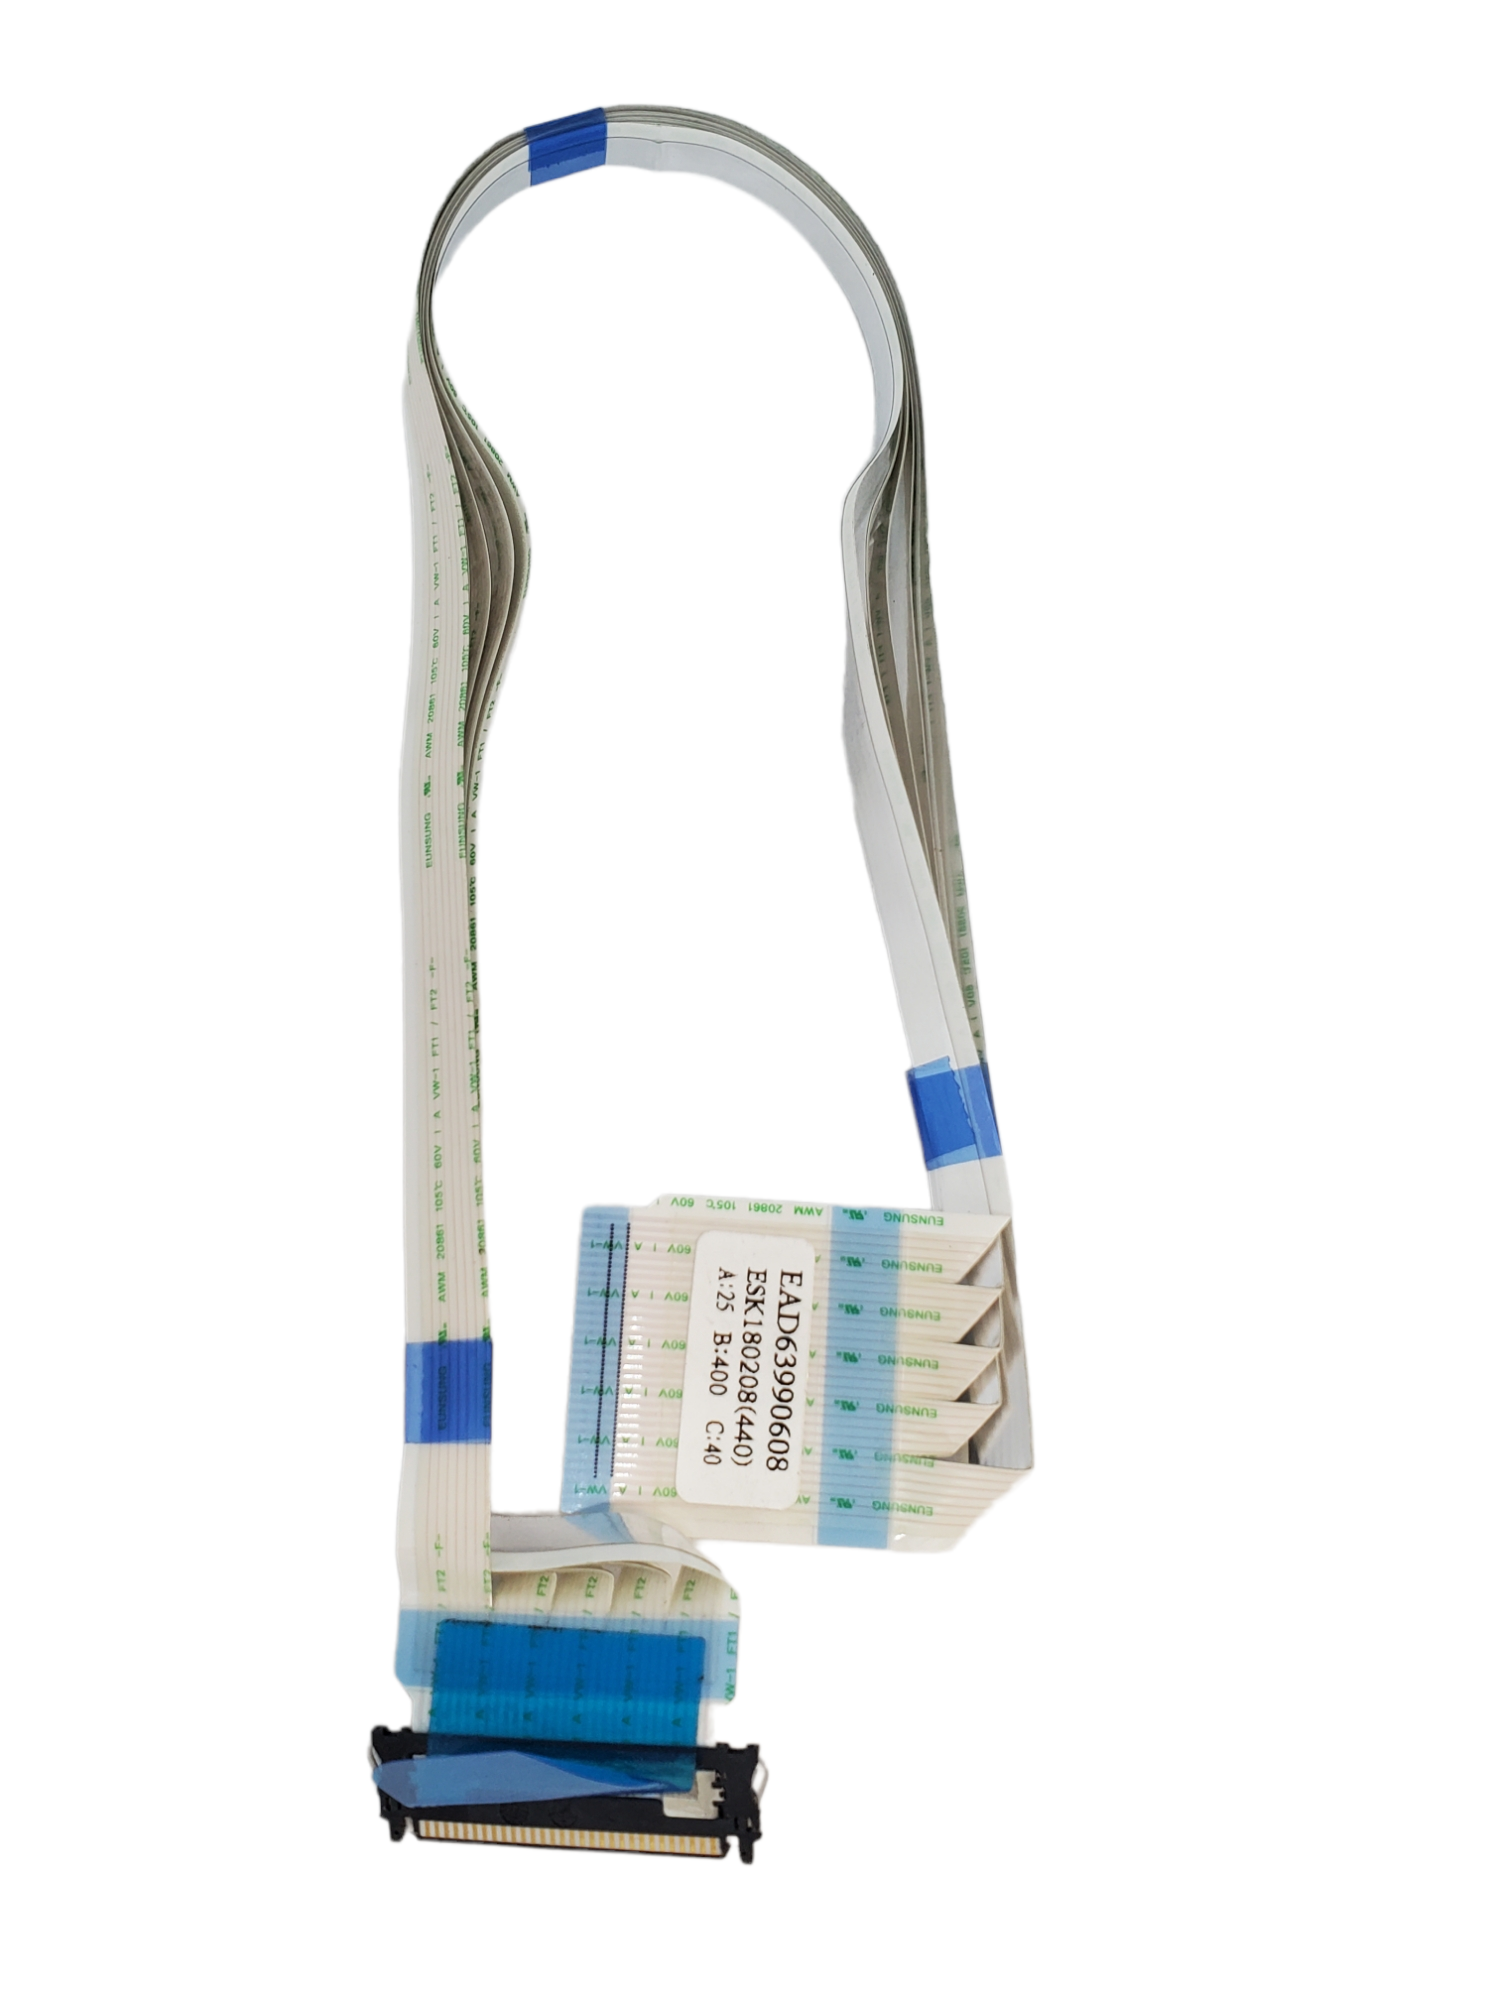 kit flexor, cable de corriente, modulo de encendido y wifi LG 32LK610BPUA